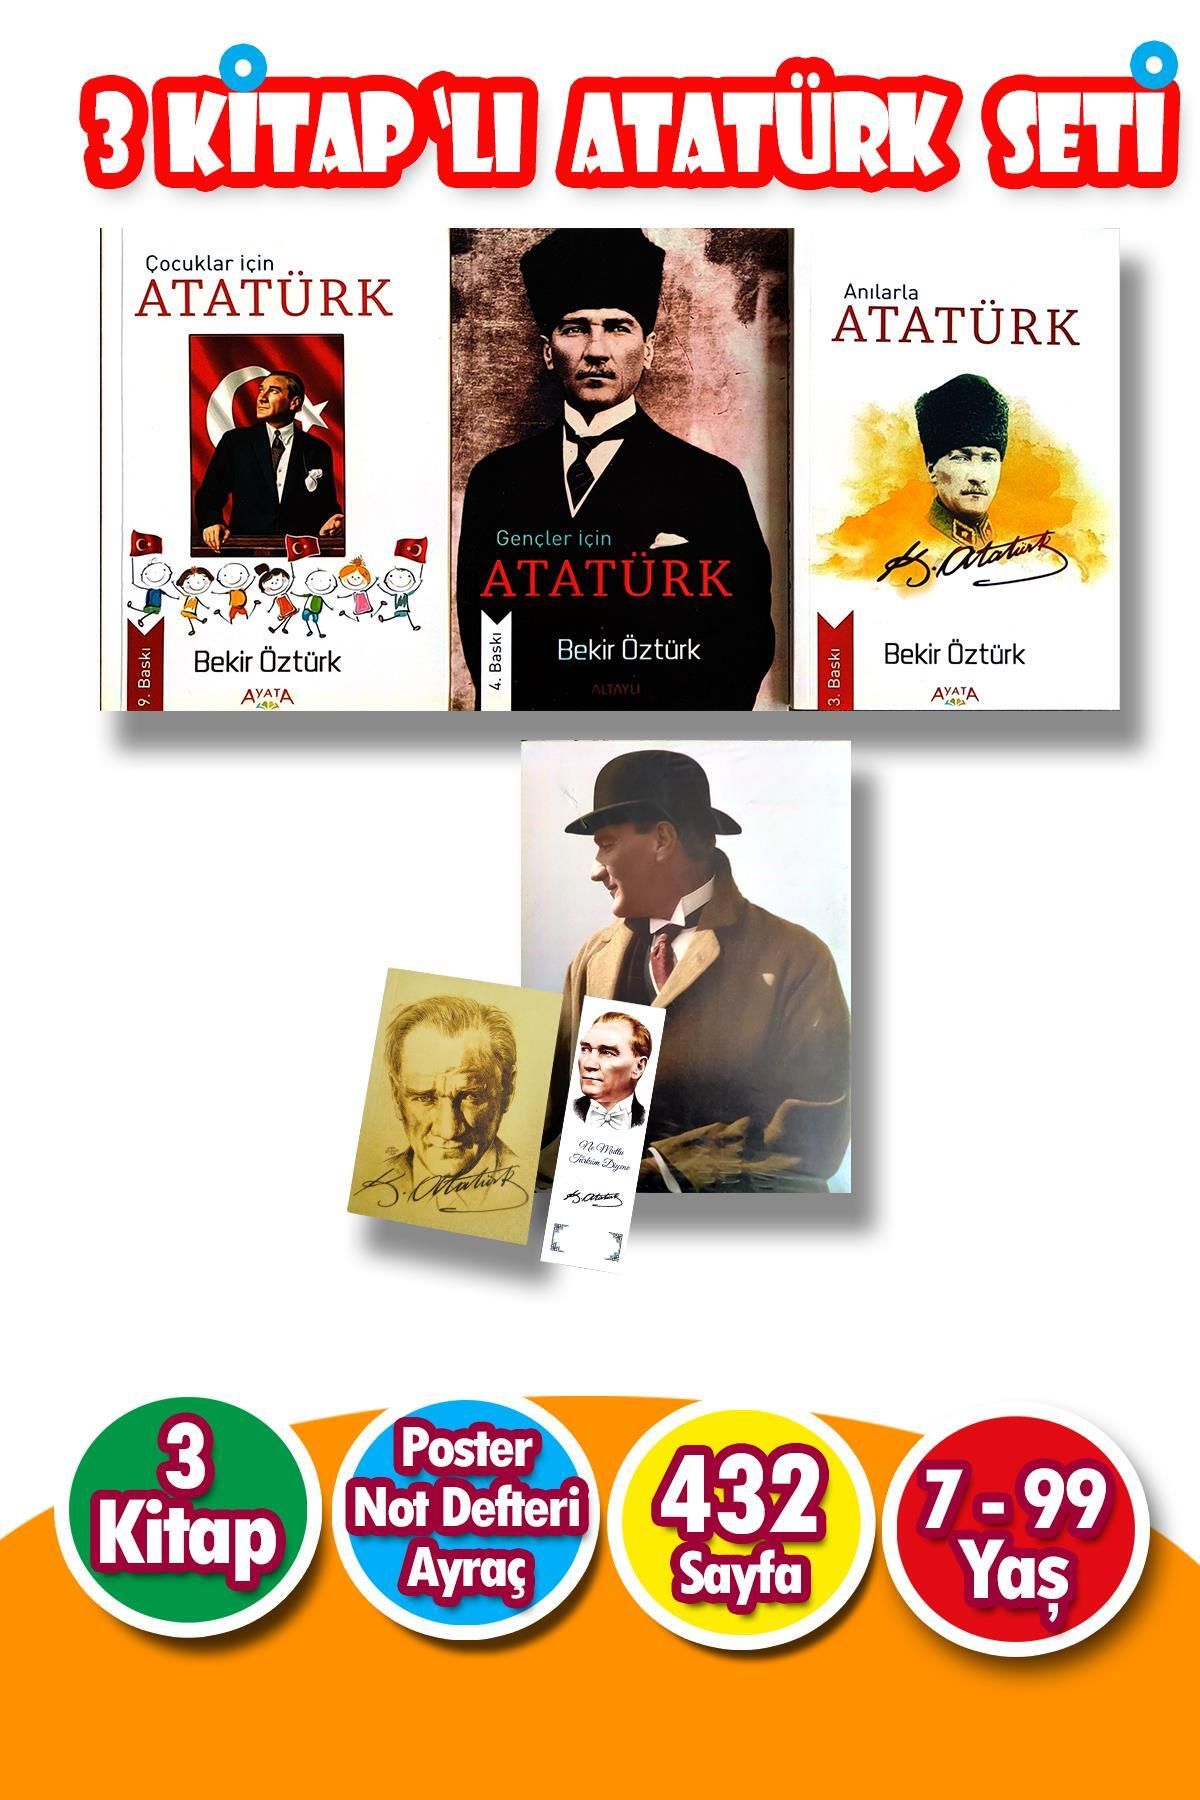 Harika Kitap 3 Kitaptan Oluşan Muhteşem Atatürk Seti (3 Kitap,Poster,Not Defteri,Ayraç)